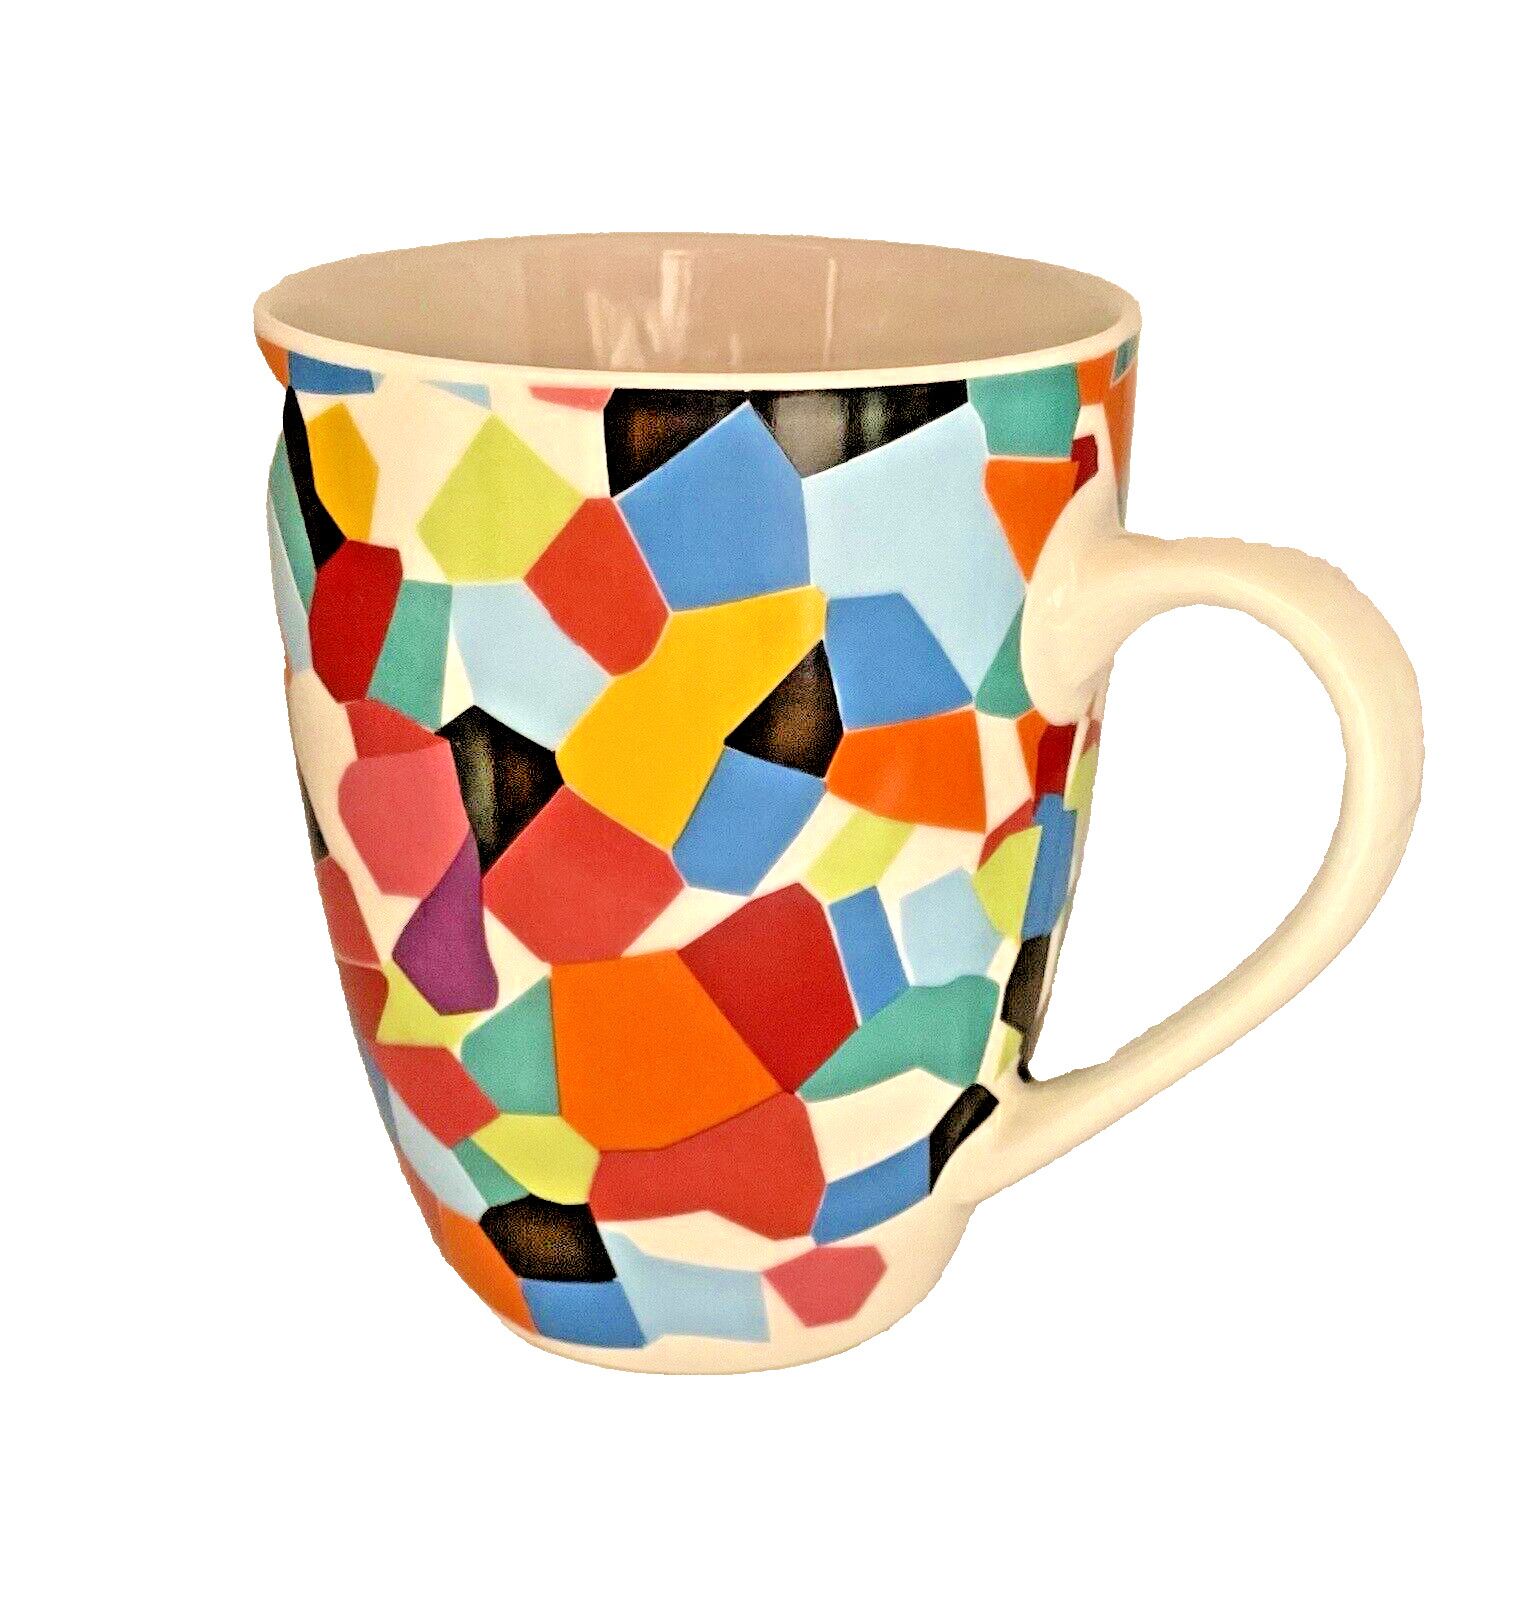 Oui French Bull Coffee Mug Multi Color Mosaic Design White Background 12 ozs